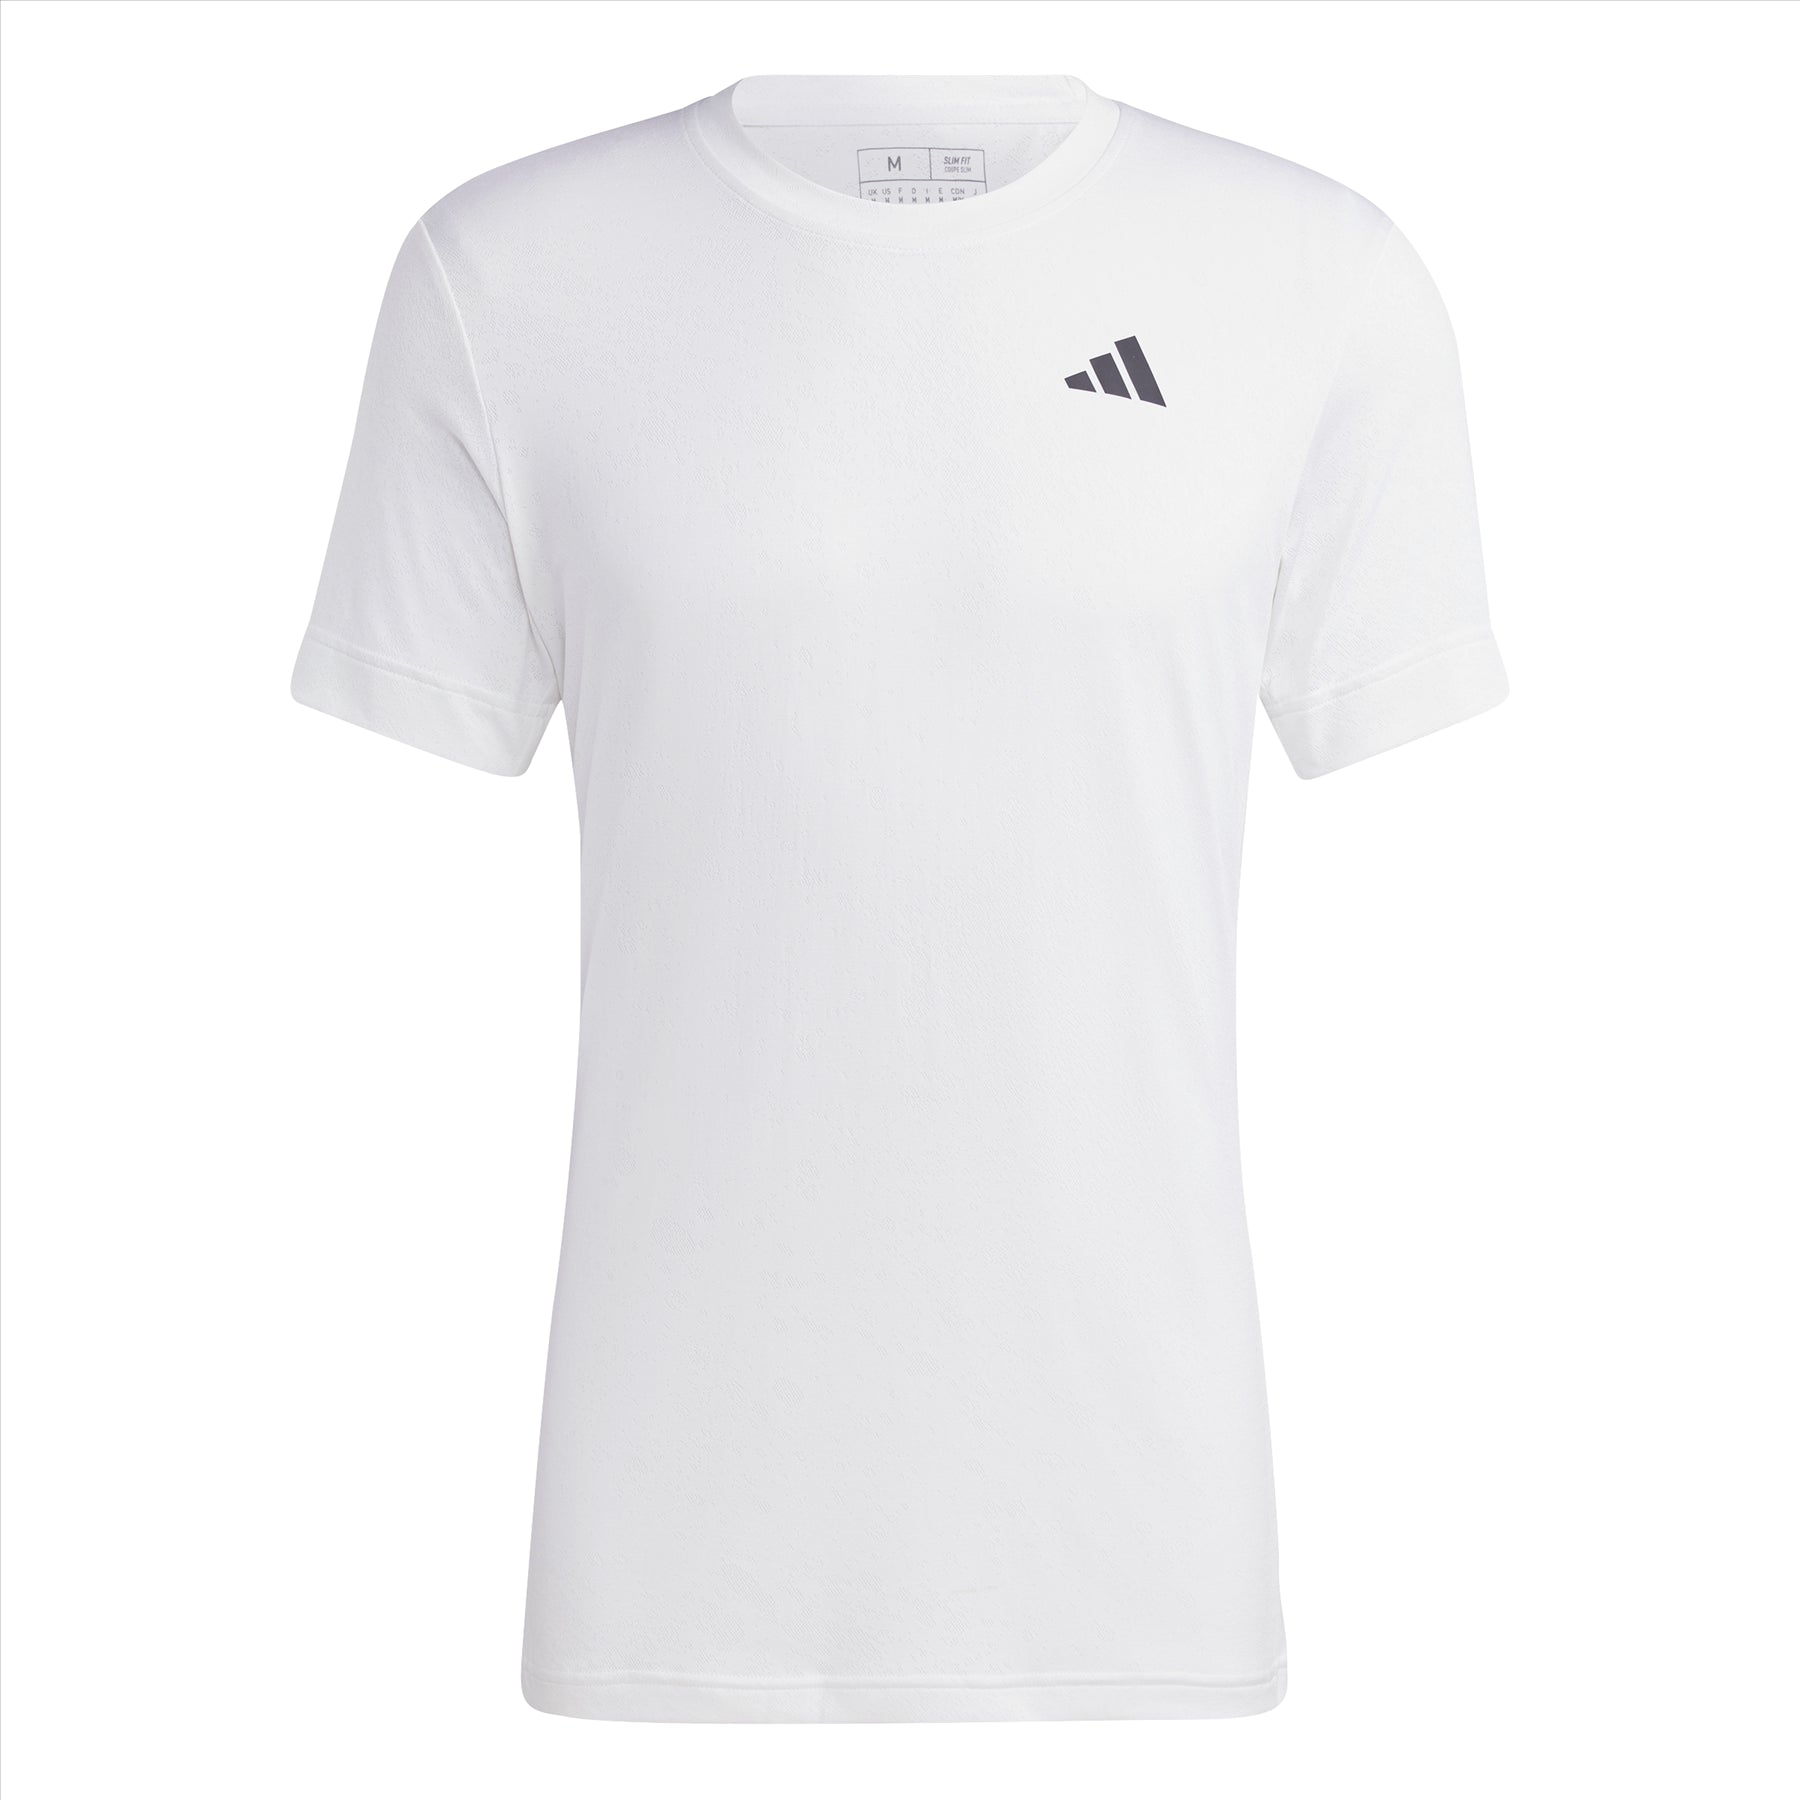 ADIDAS Mens Freelift Badminton T-Shirt - White